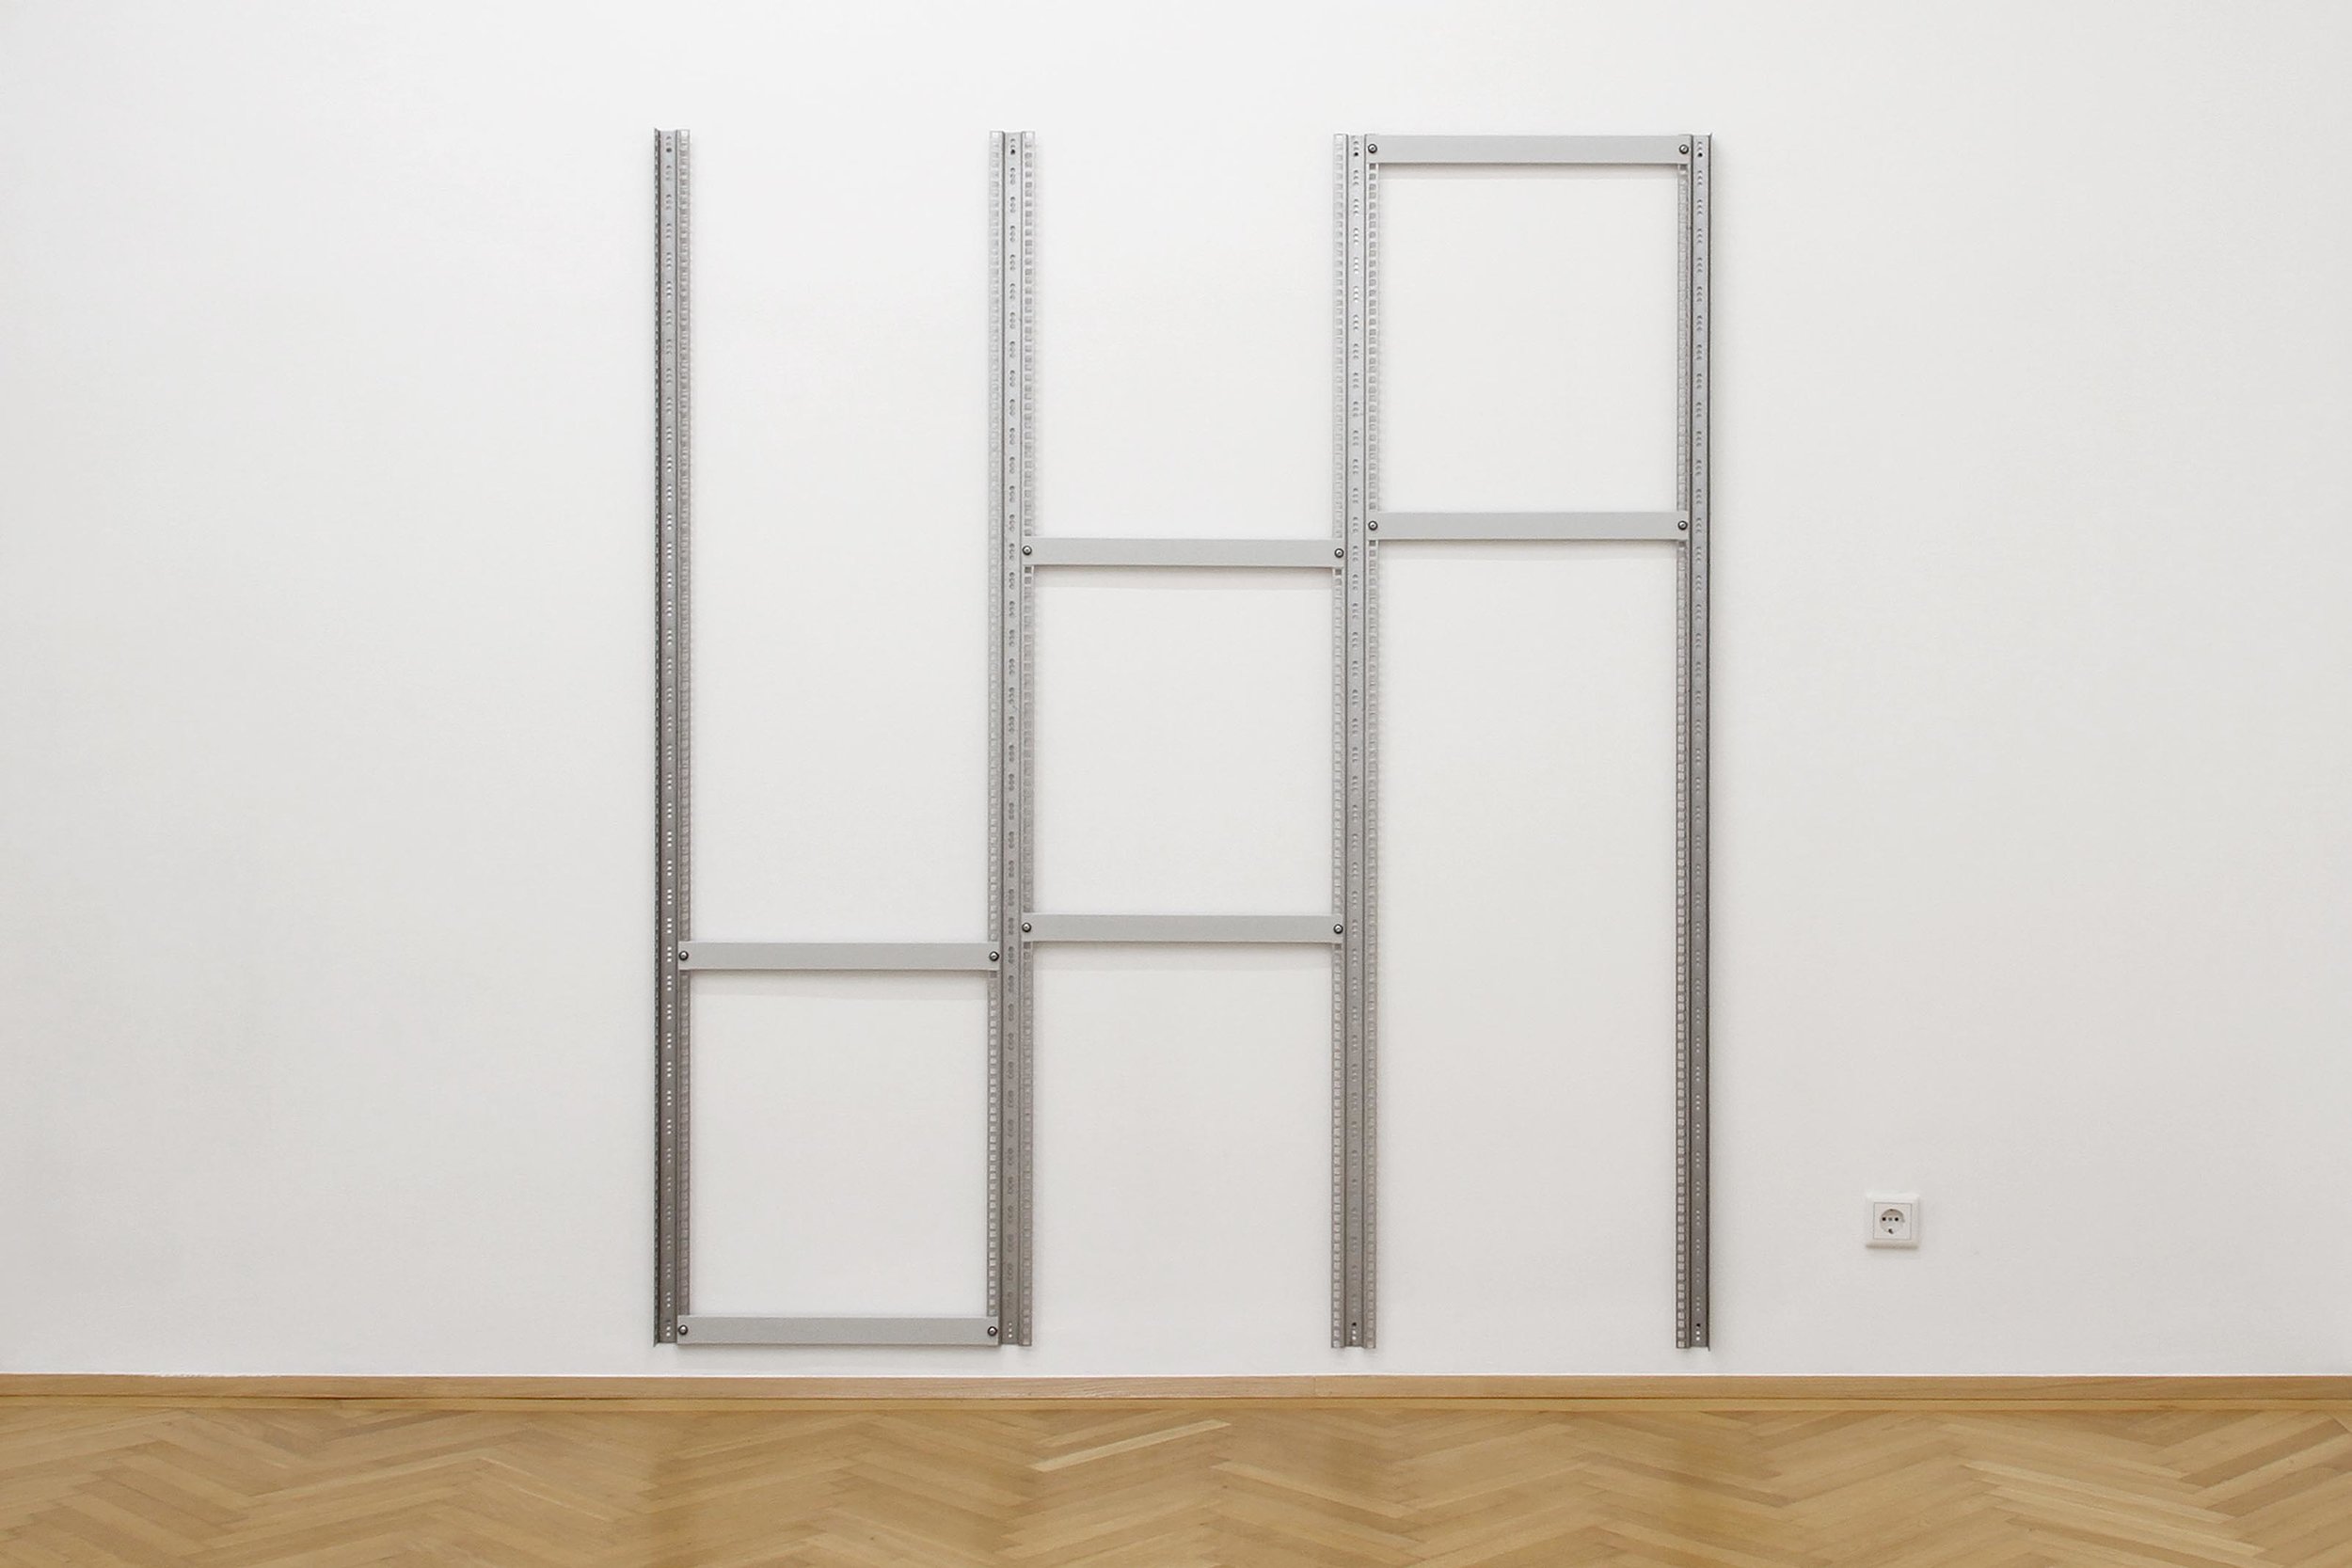 Ulrich Nausner, Memory Object (Grey) #5, 2017, server rack rails, blank panels, screws, 186,5 x 157,8 x 3,2 cm, 1 + 1AP 